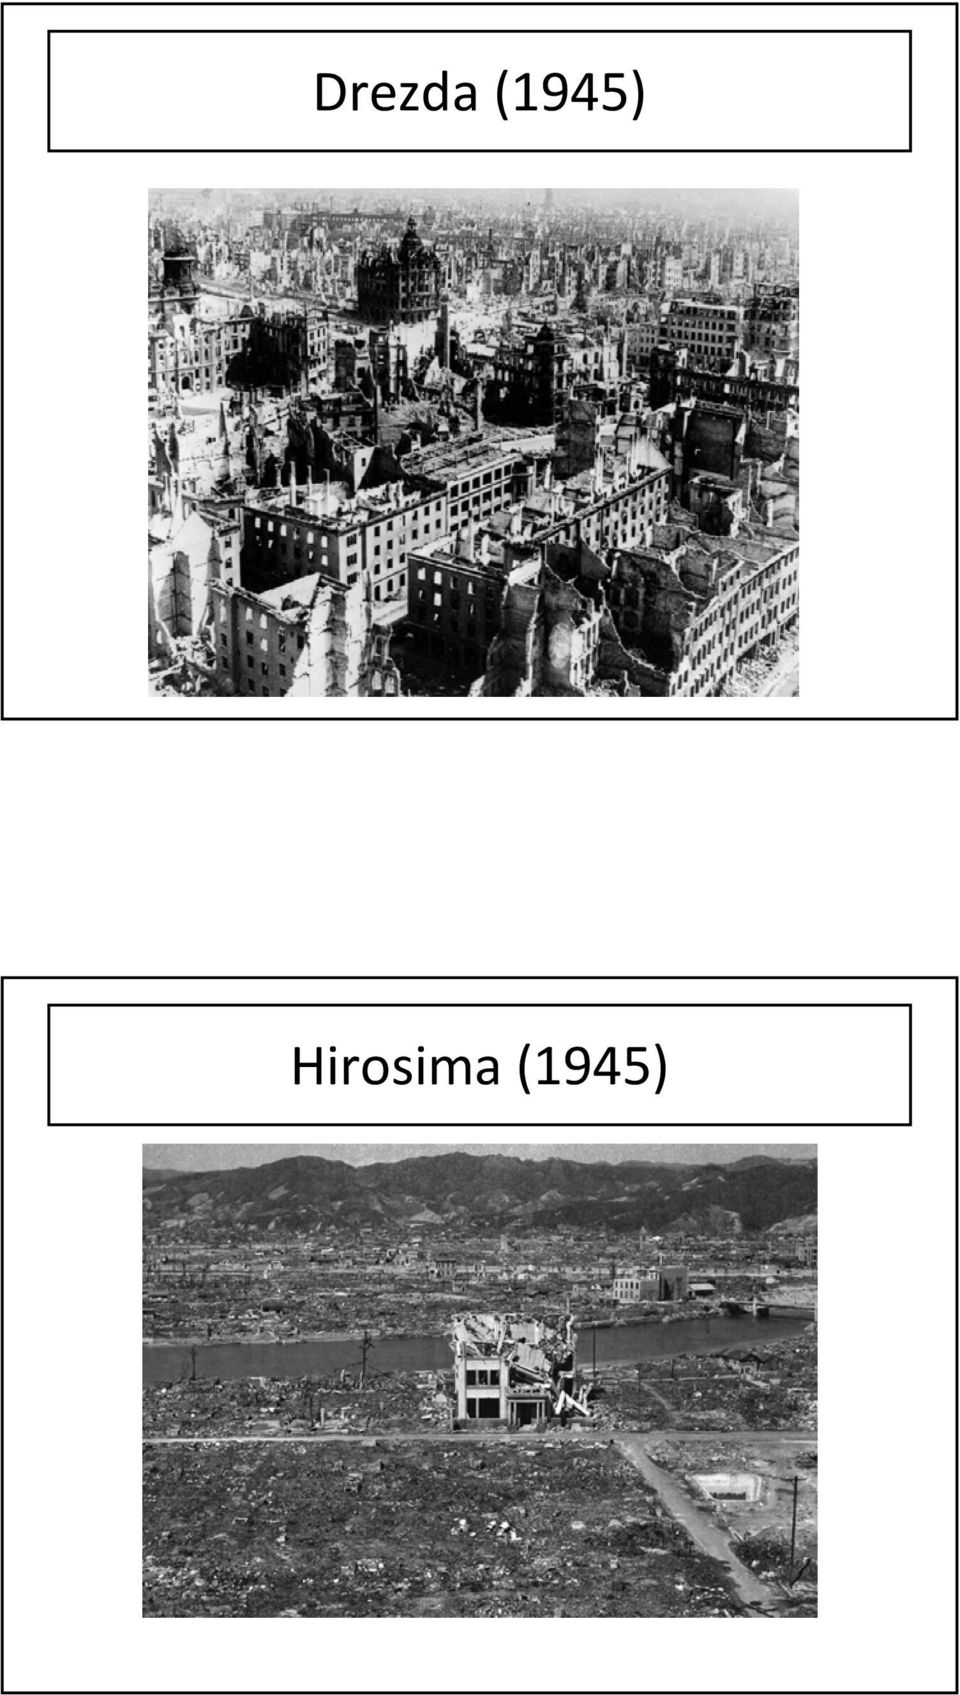 Hirosima